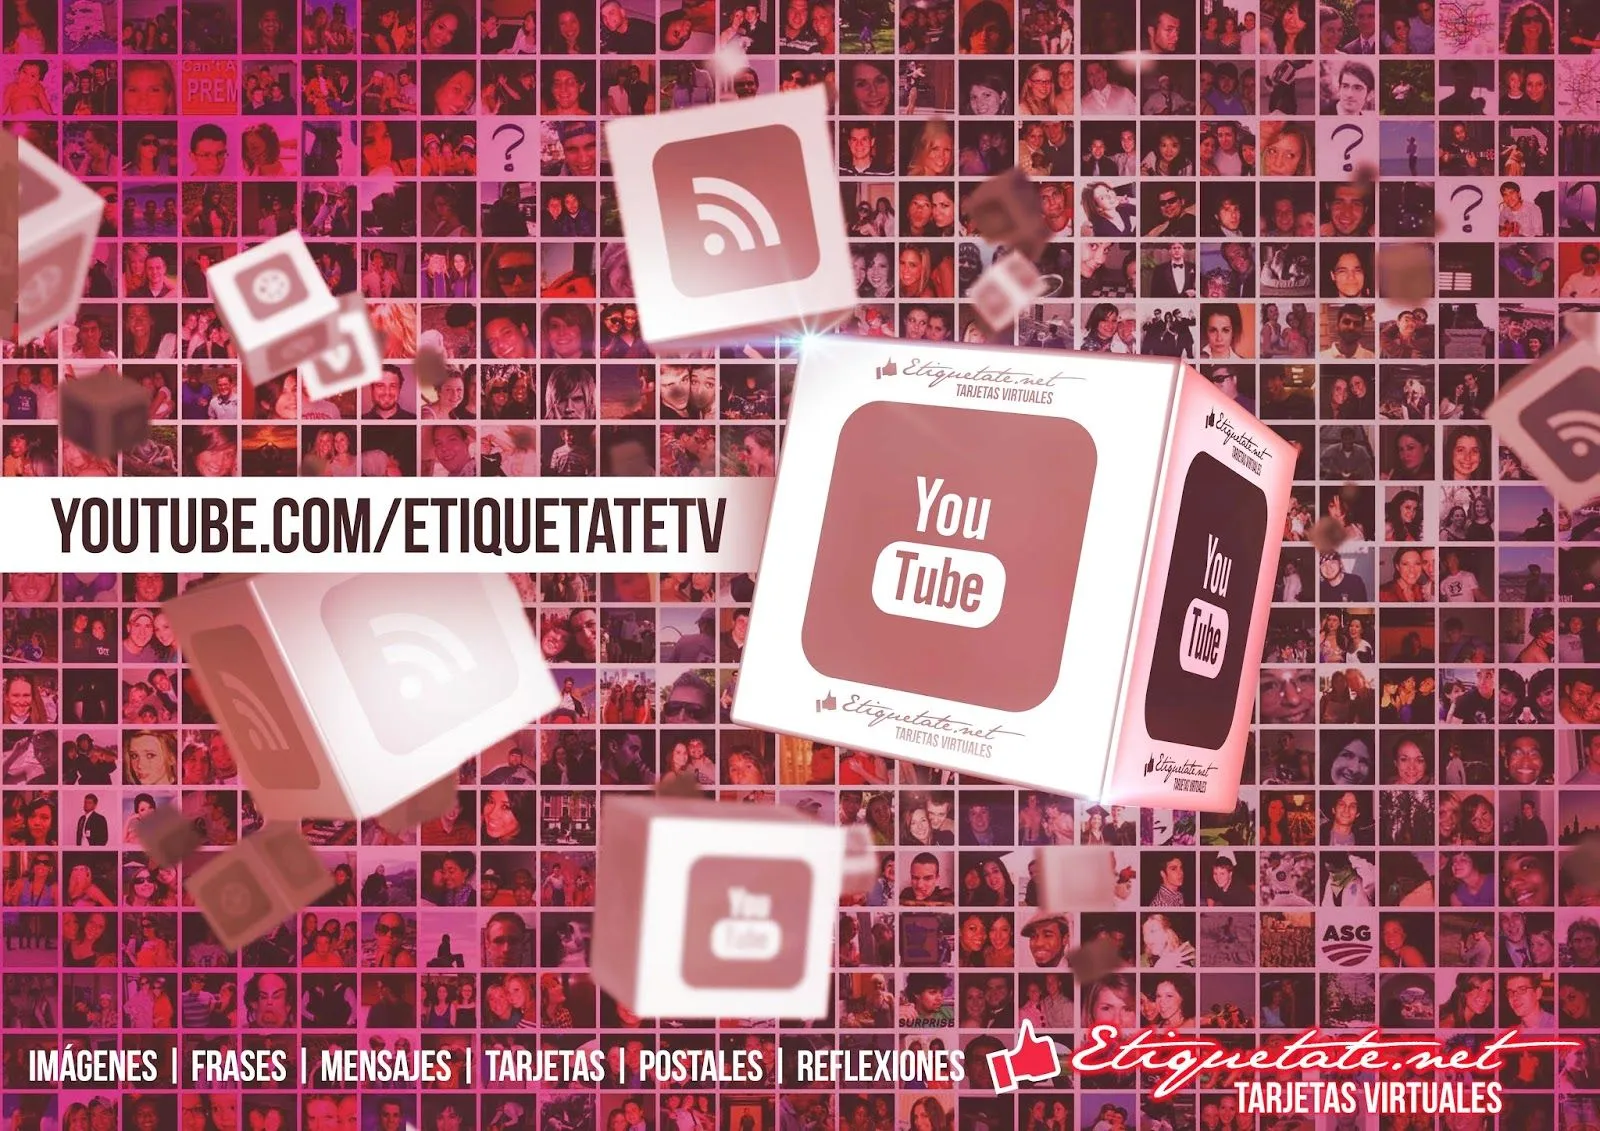 Sígue a ETIQUETATE.NET en las redes sociales .:  Twitter, Facebook, YouTube, Google+, Flickr, Instagram, Pinterest.